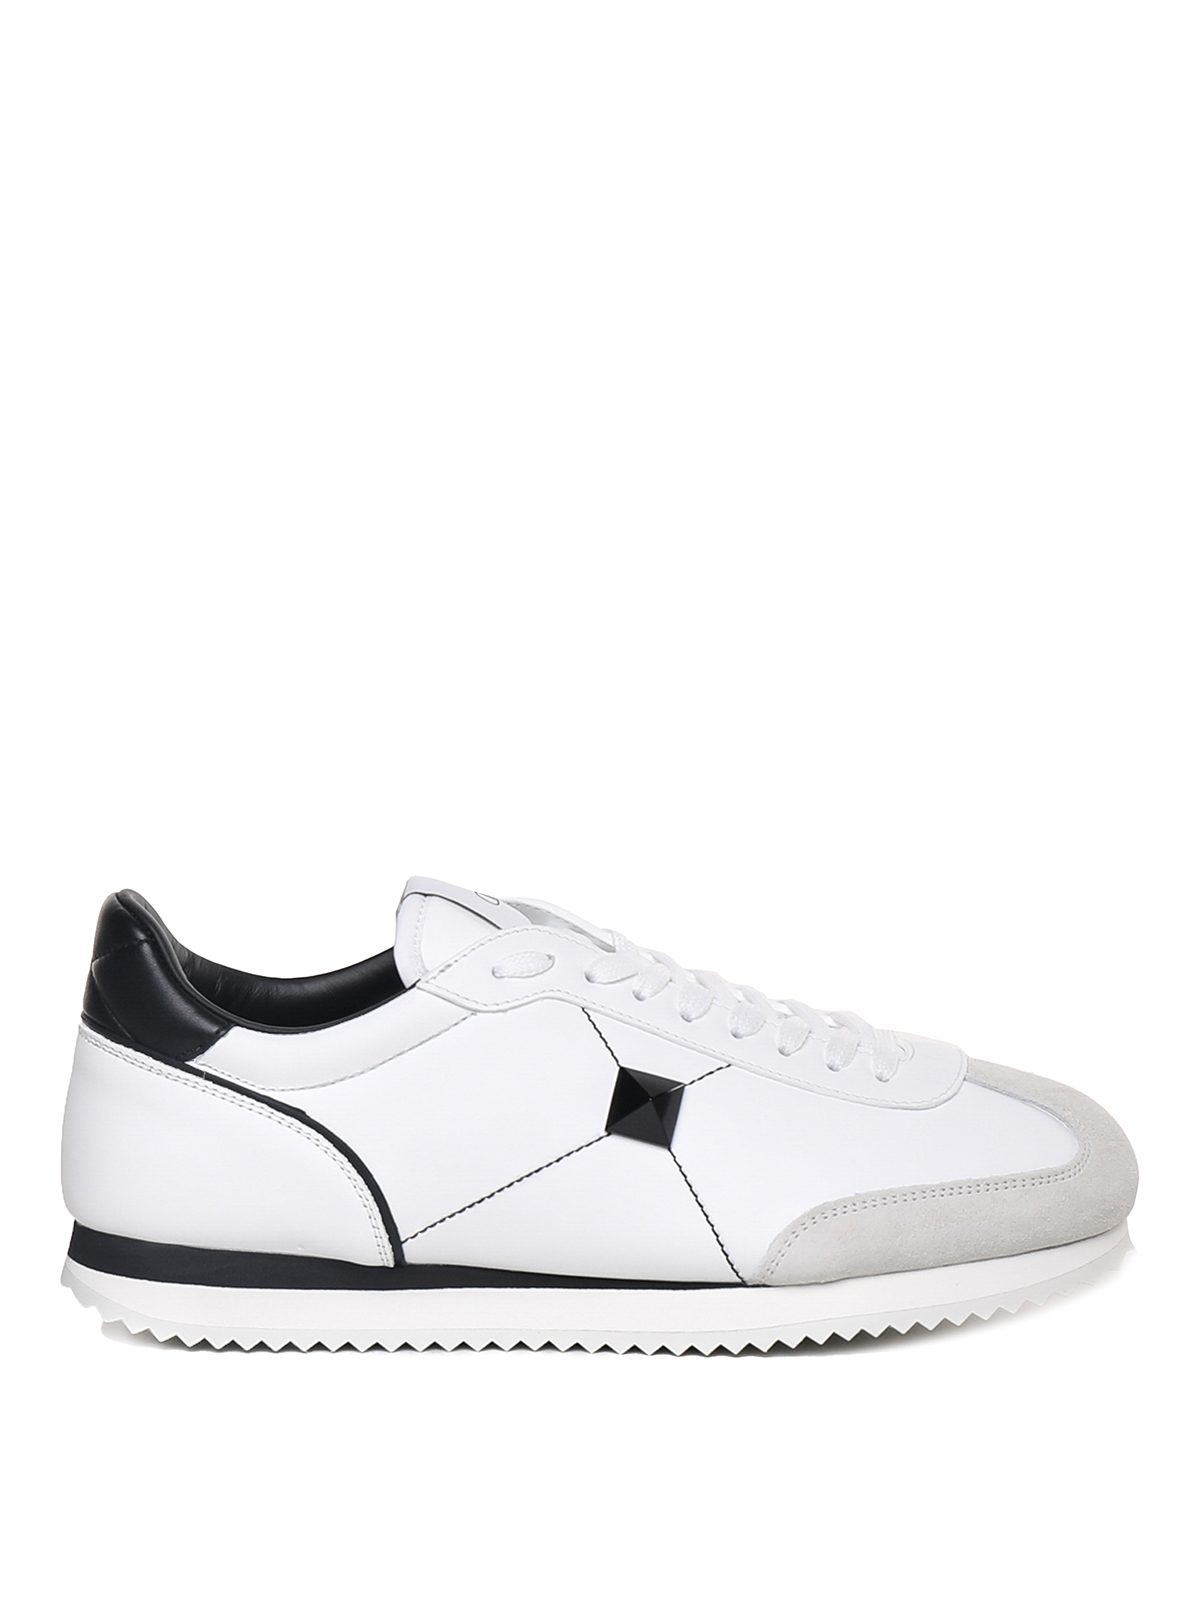 Valentino Garavani Leather Trainers With Suede Toe In White